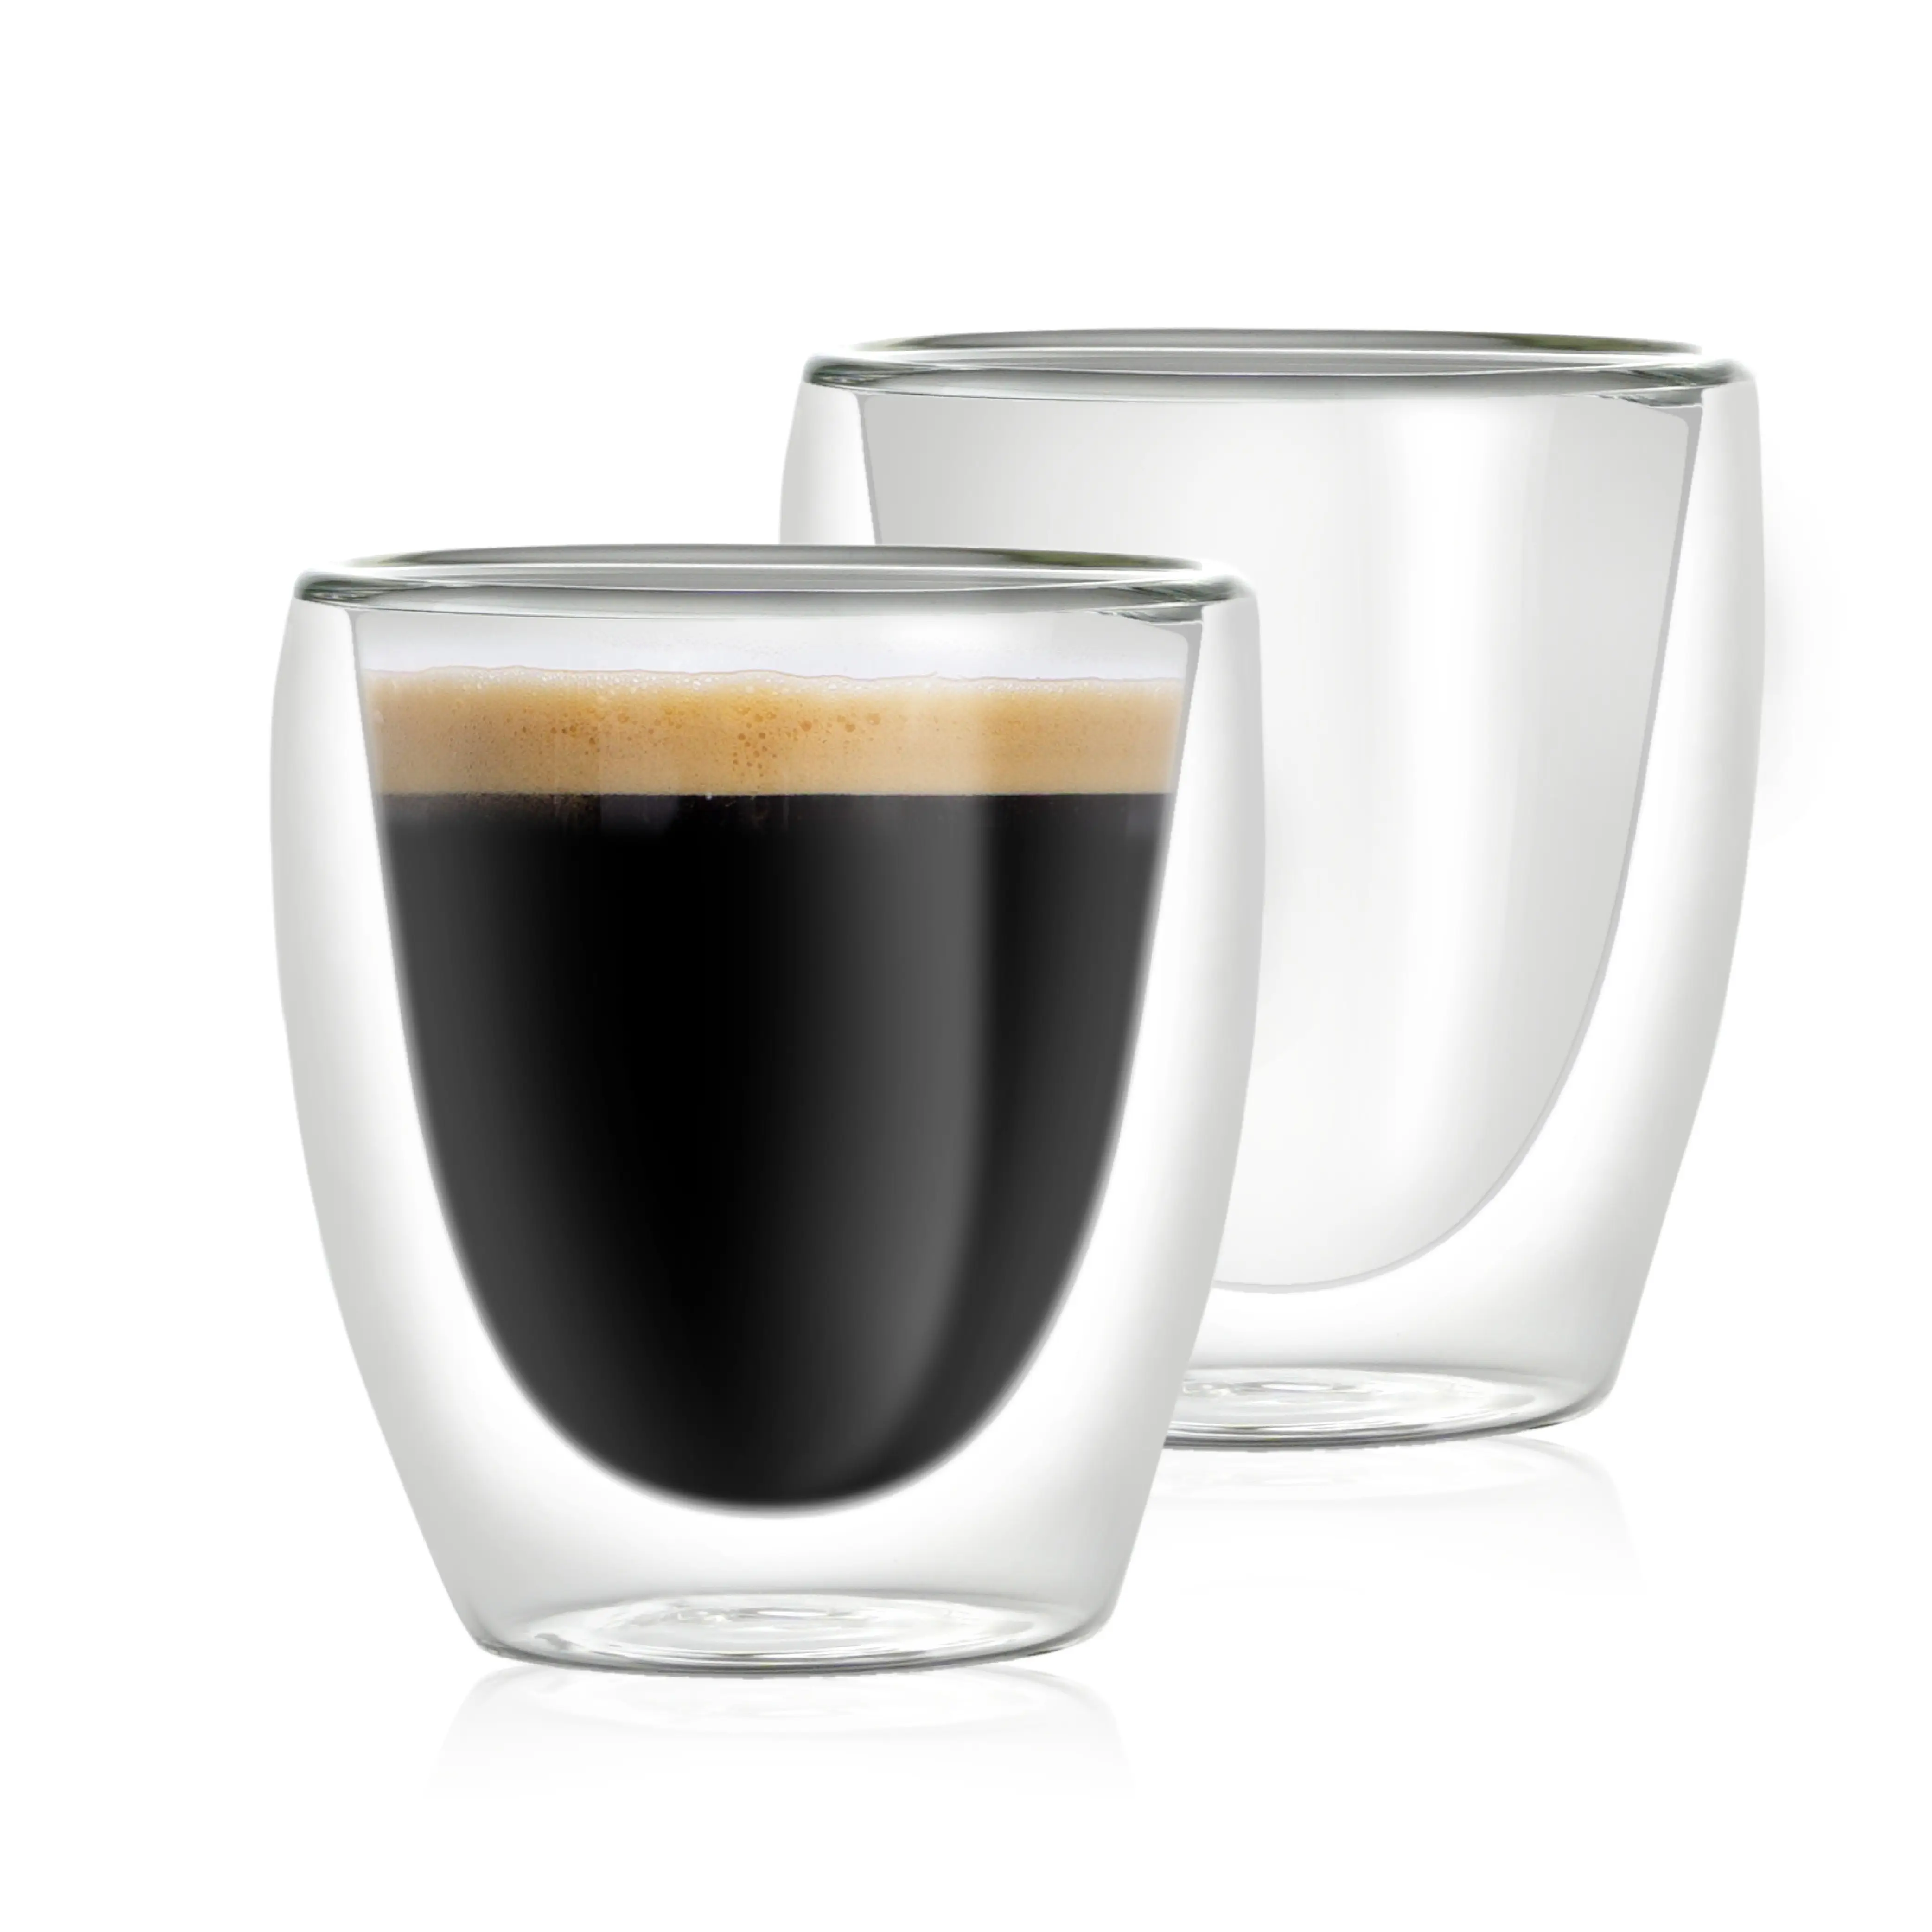 Kaffeegl盲ser Torino 2x60ml doppelwandig